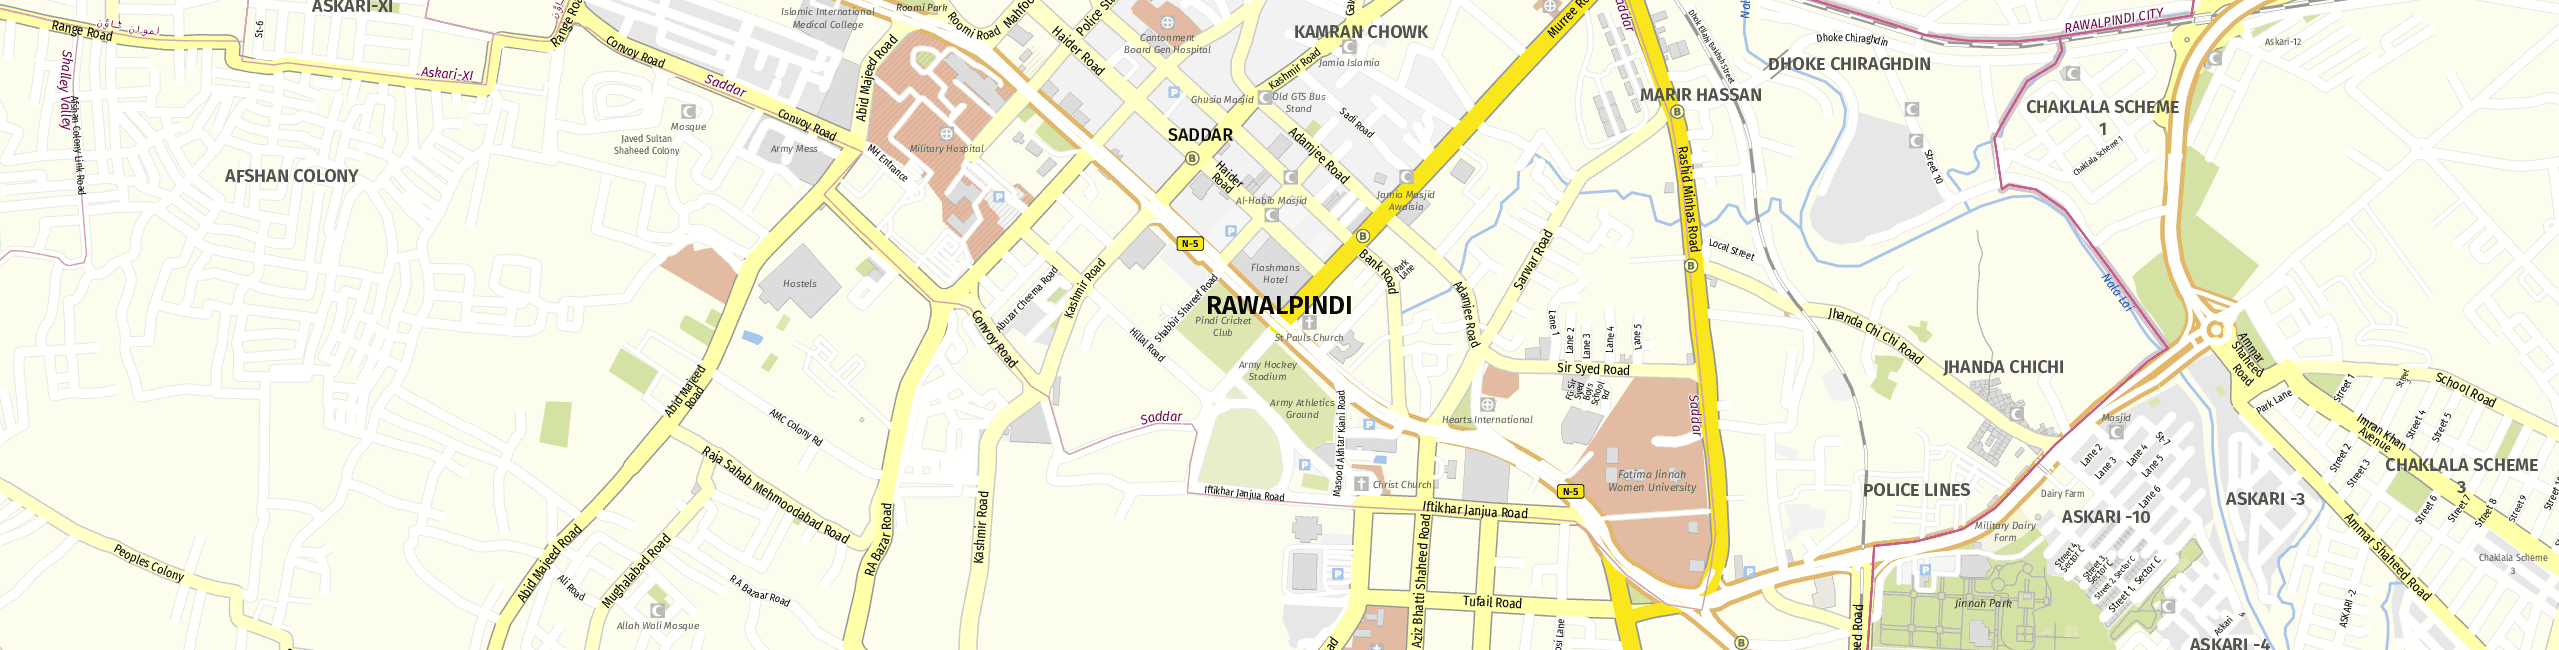 Stadtplan Rawalpindi zum Downloaden.